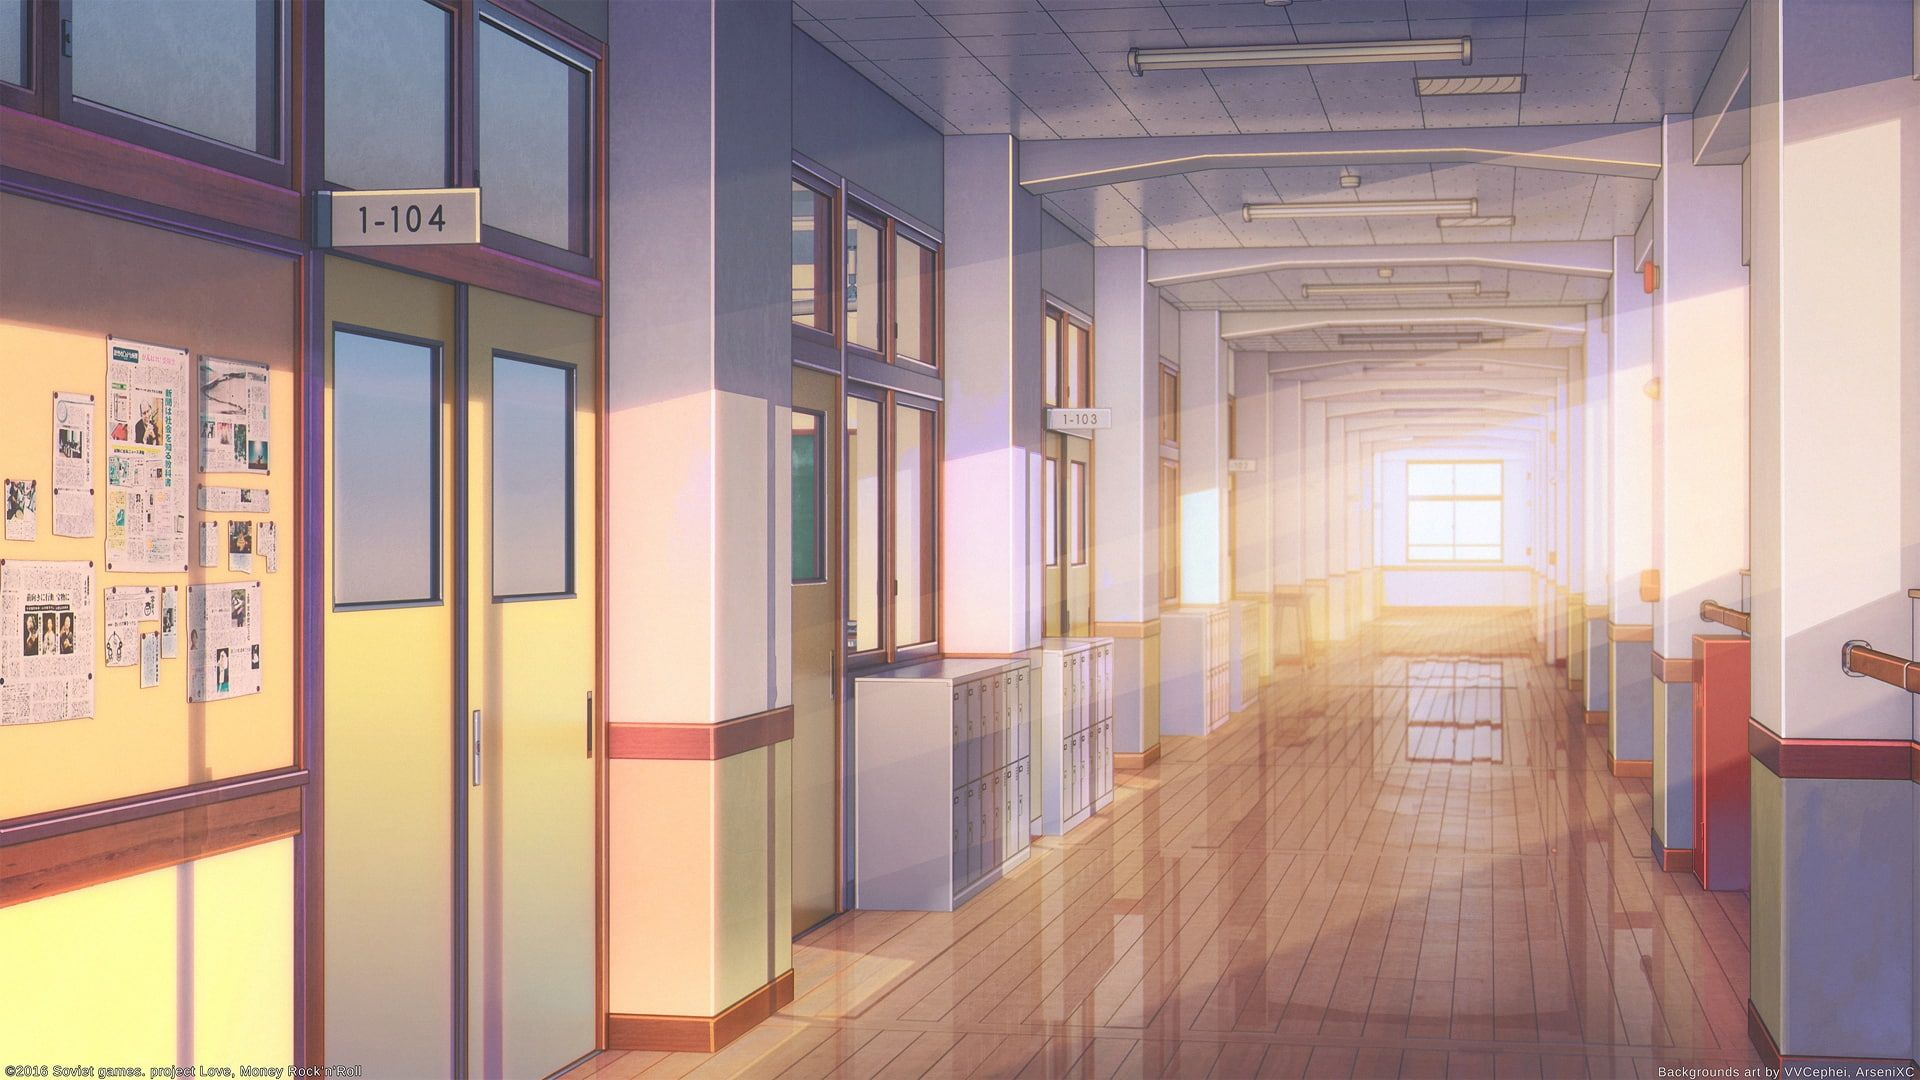 1920x1080 anime inside the school #sunlight #windows #classrooms #Anime #1080P # wallpaper #hdwallpaper #desk&acirc;&#128;&brvbar; | Anime classroom, Anime backgrounds wallpapers, School hallways